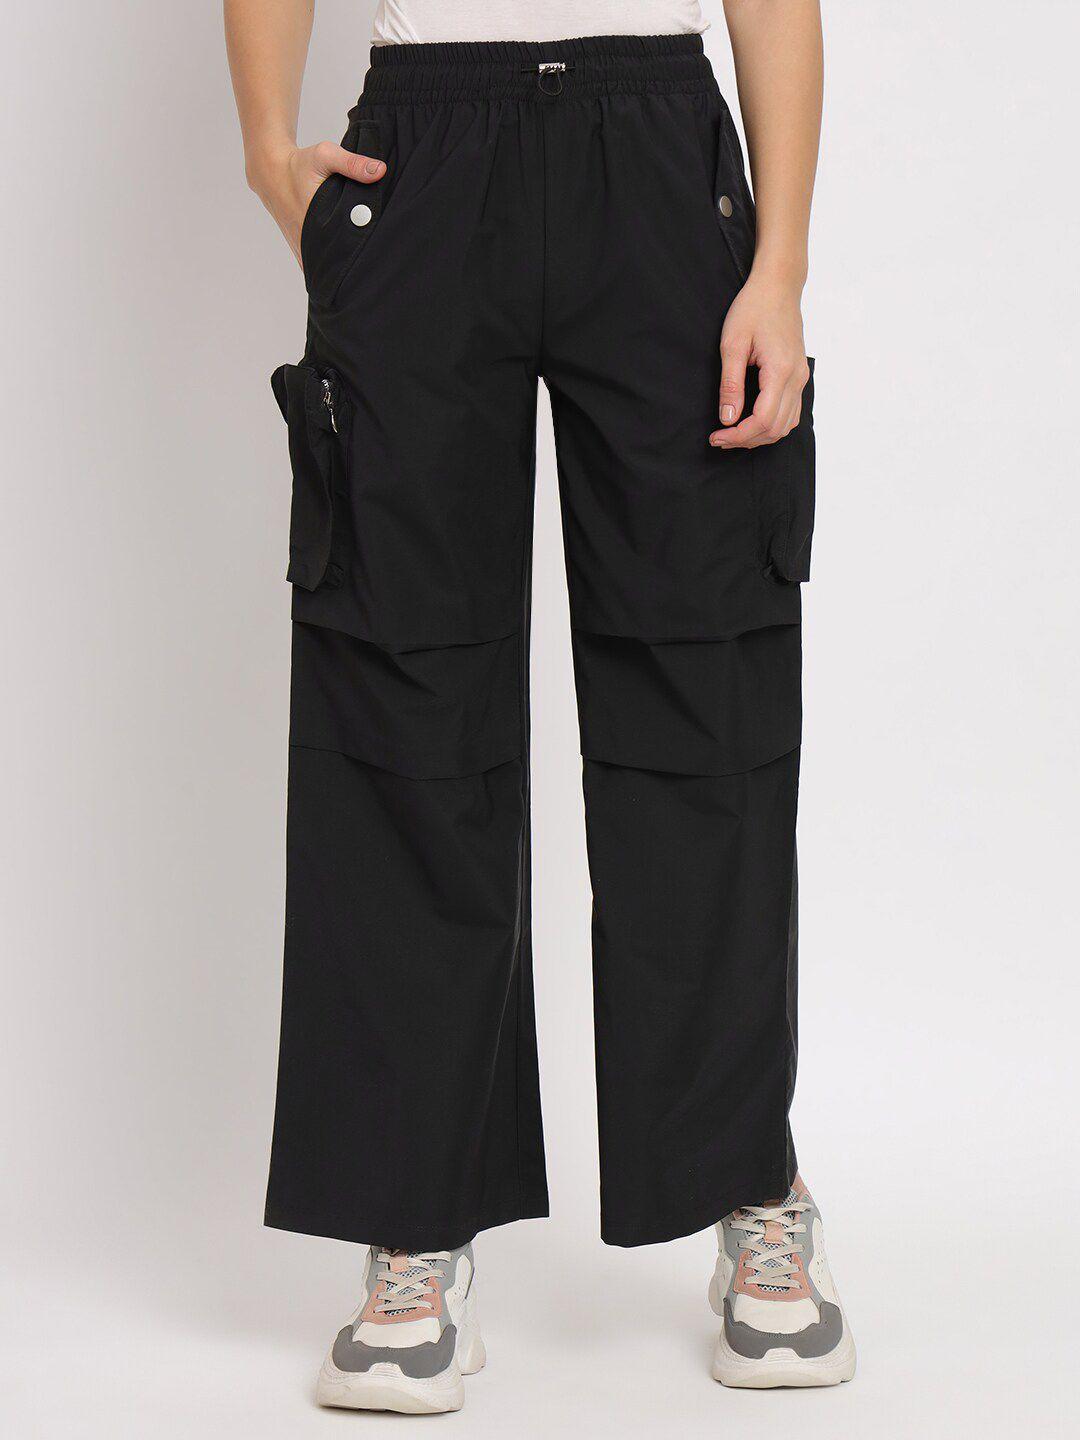 vividartsy-women-black-tapered-fit-joggers-trousers